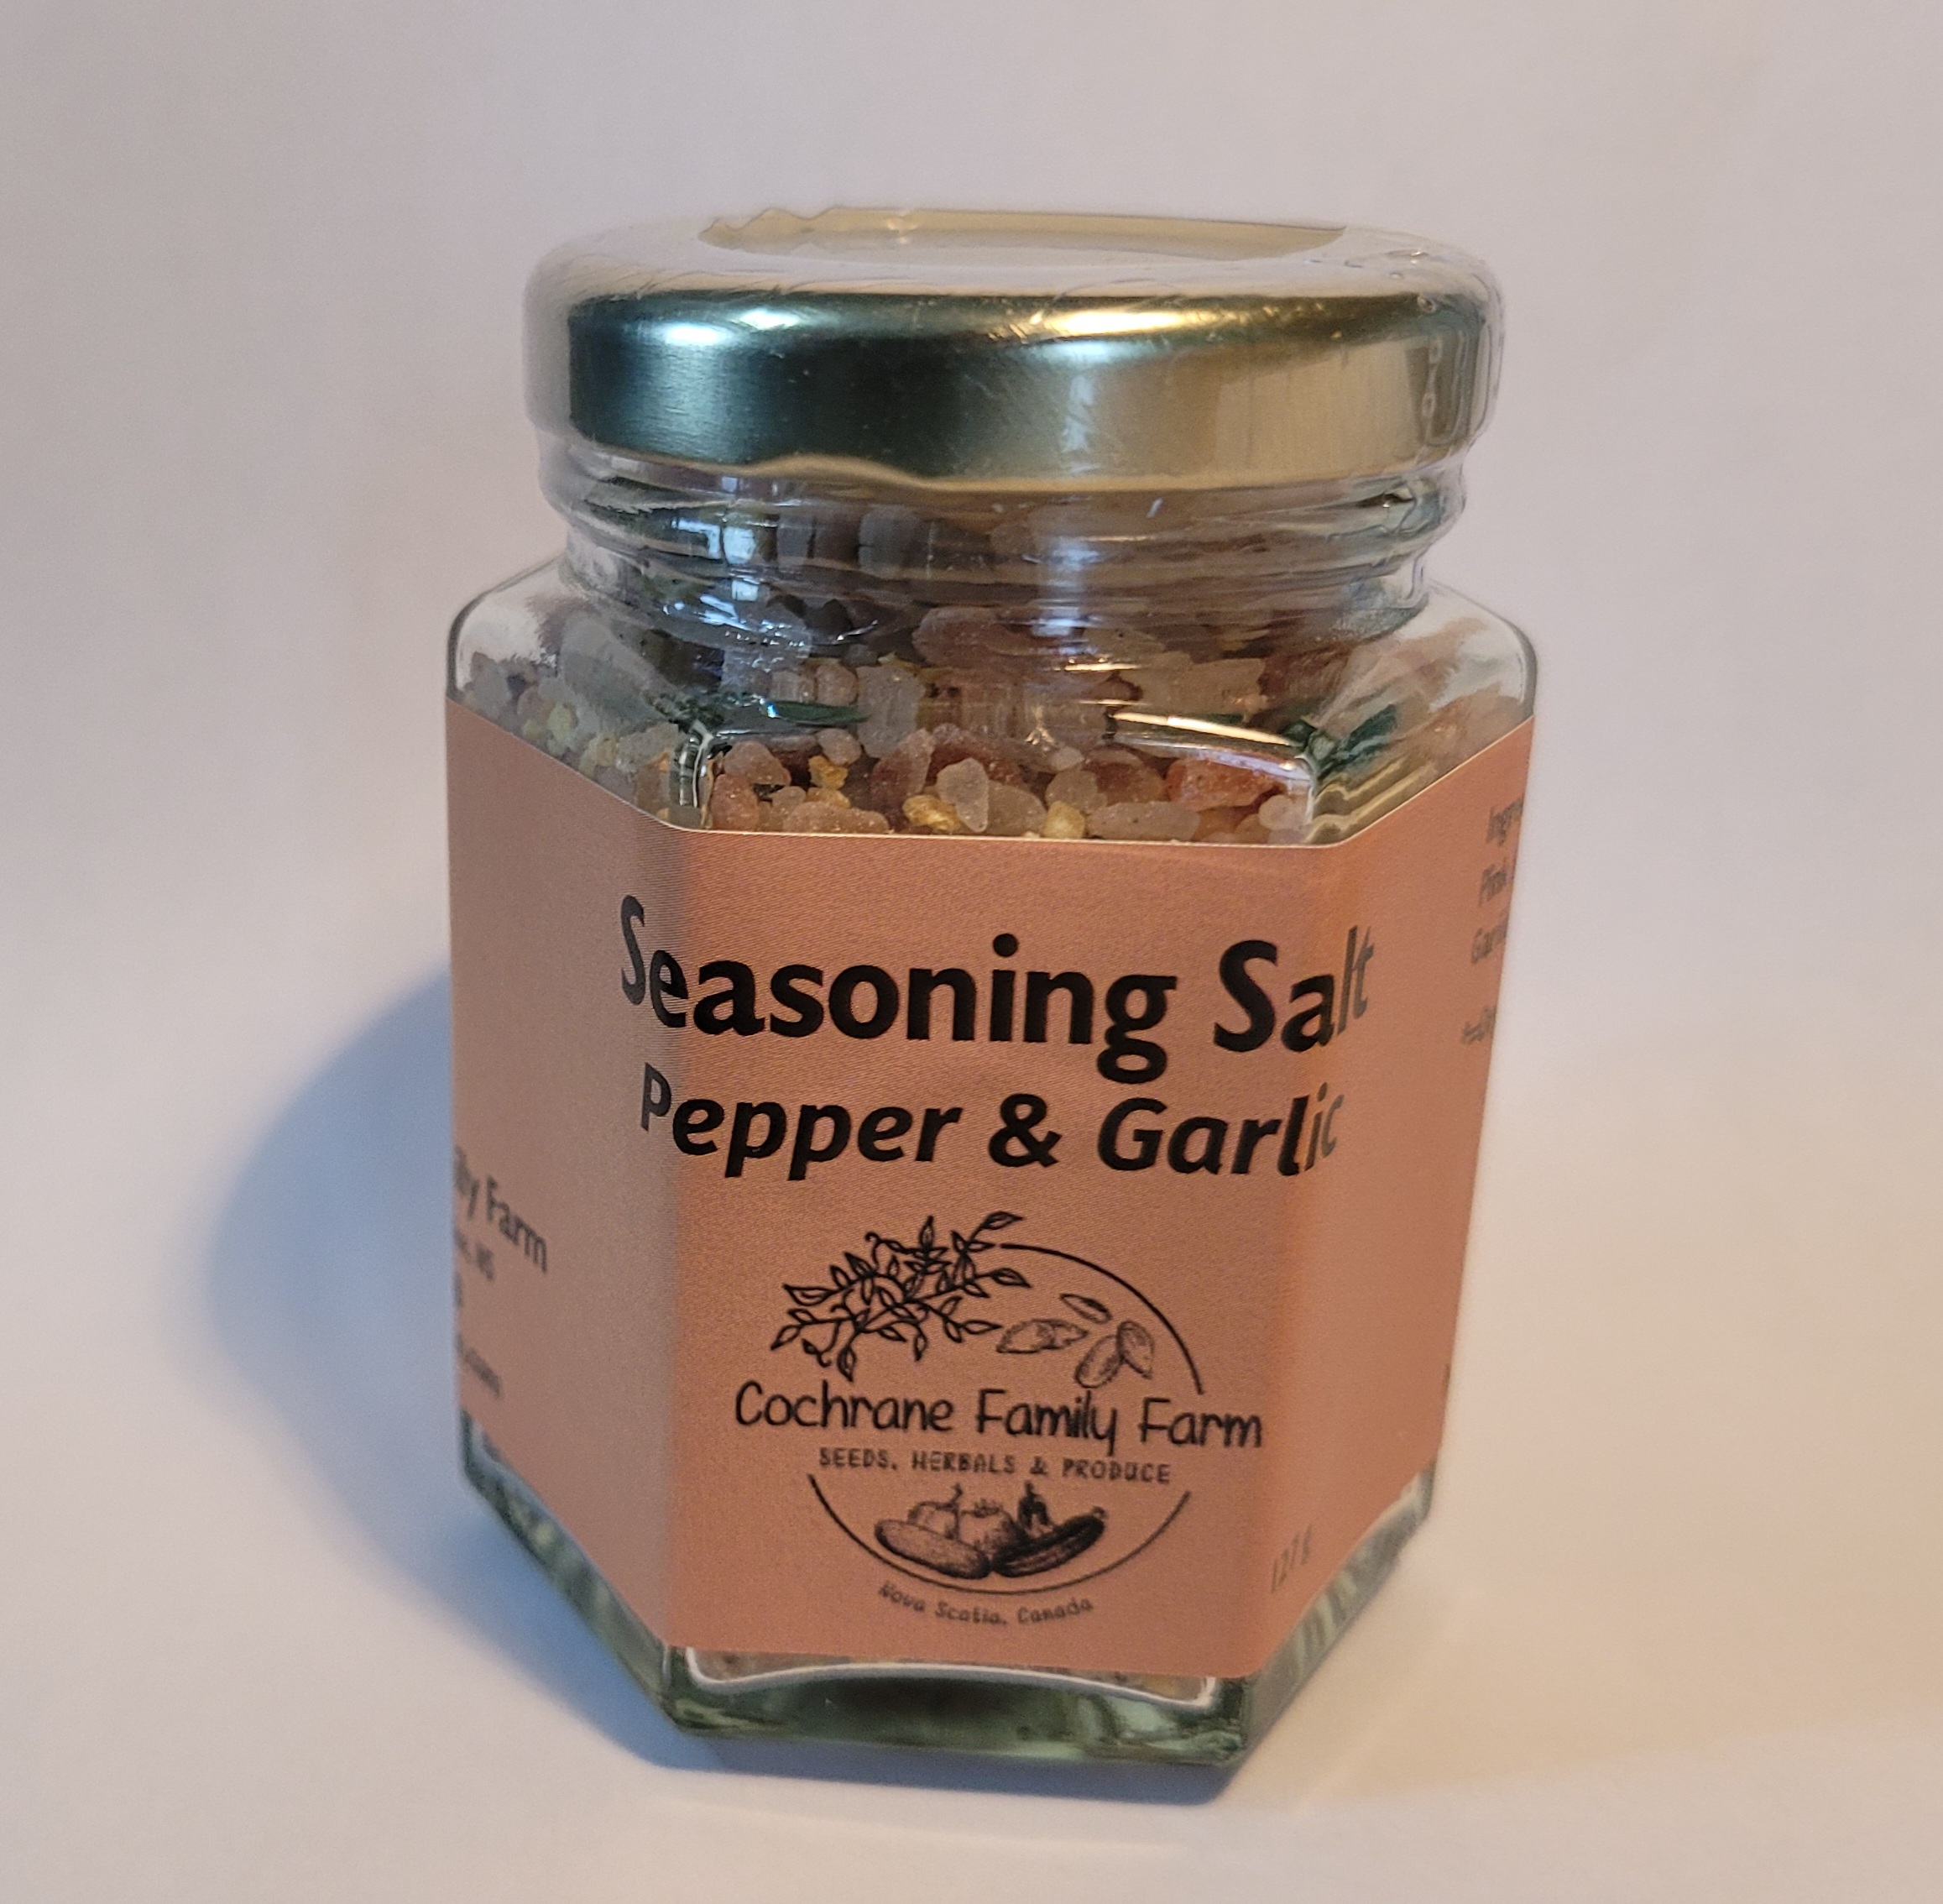 Seasoning Salt Pepper & Garlic